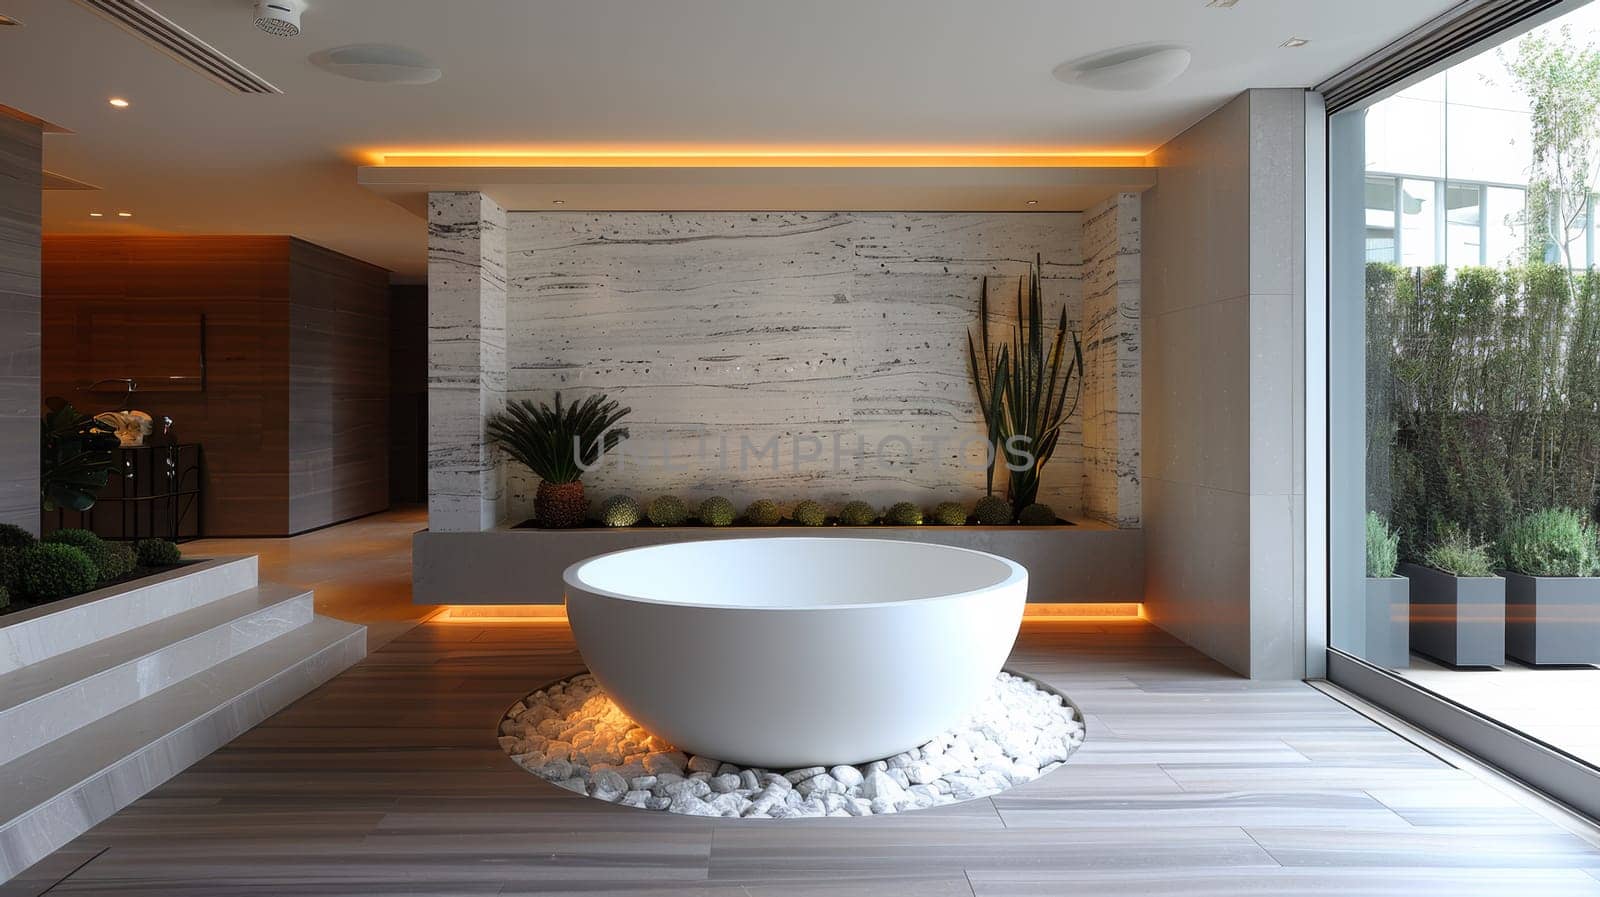 A modern bathroom with a large white bathtub and plants